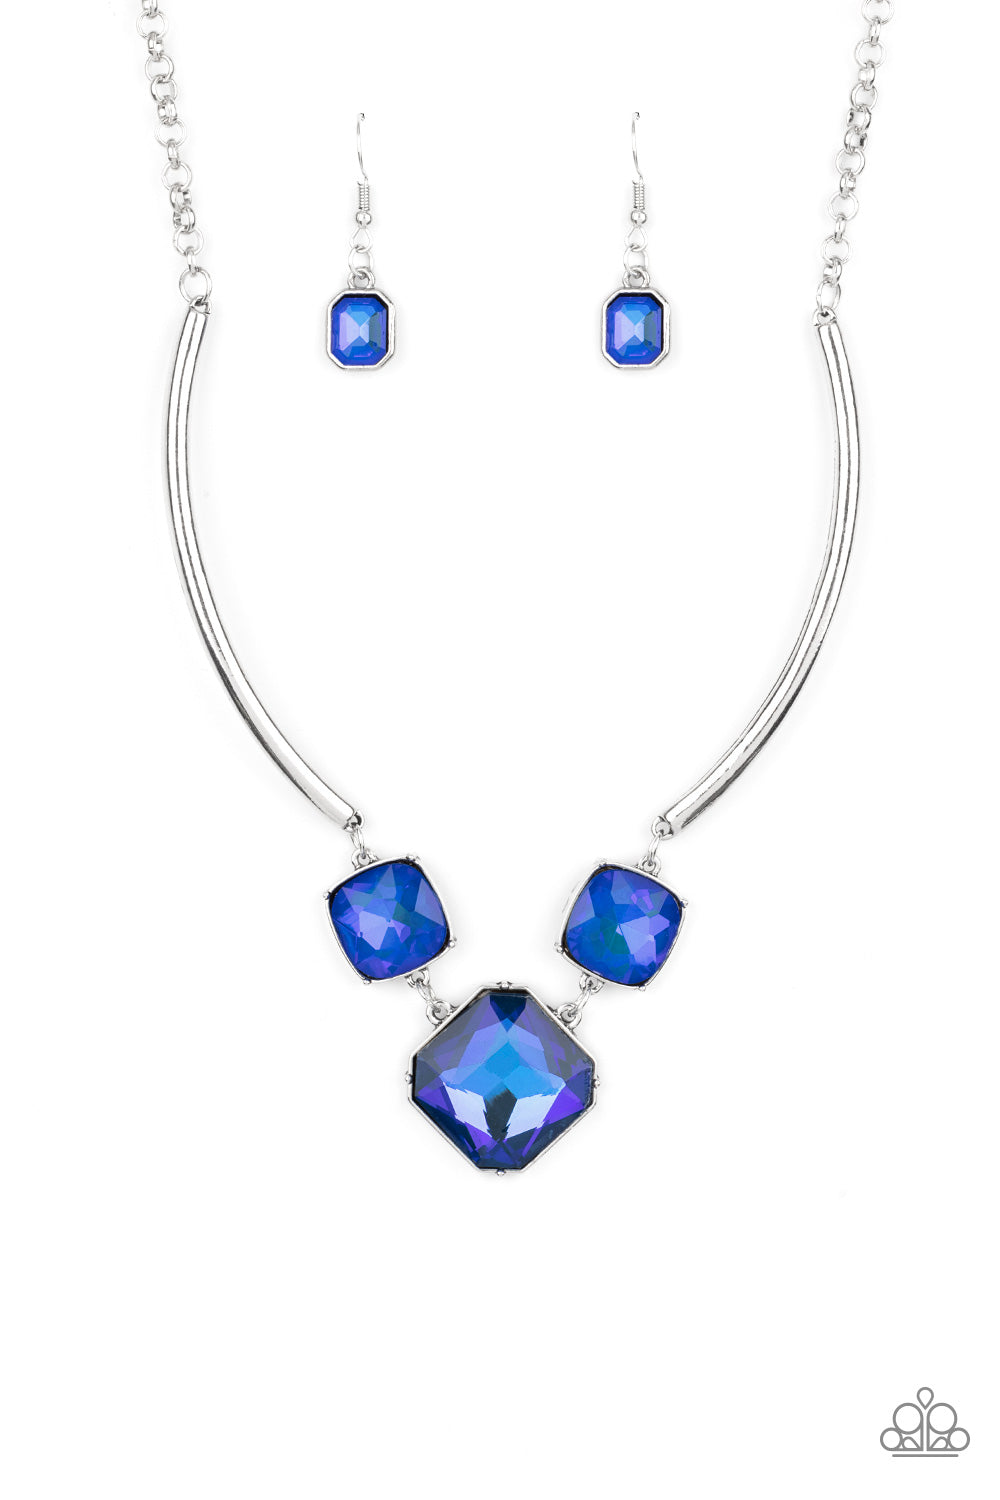 Divine IRIDESCENCE - Blue Necklace - Paparazzi - Dare2bdazzlin N Jewelry